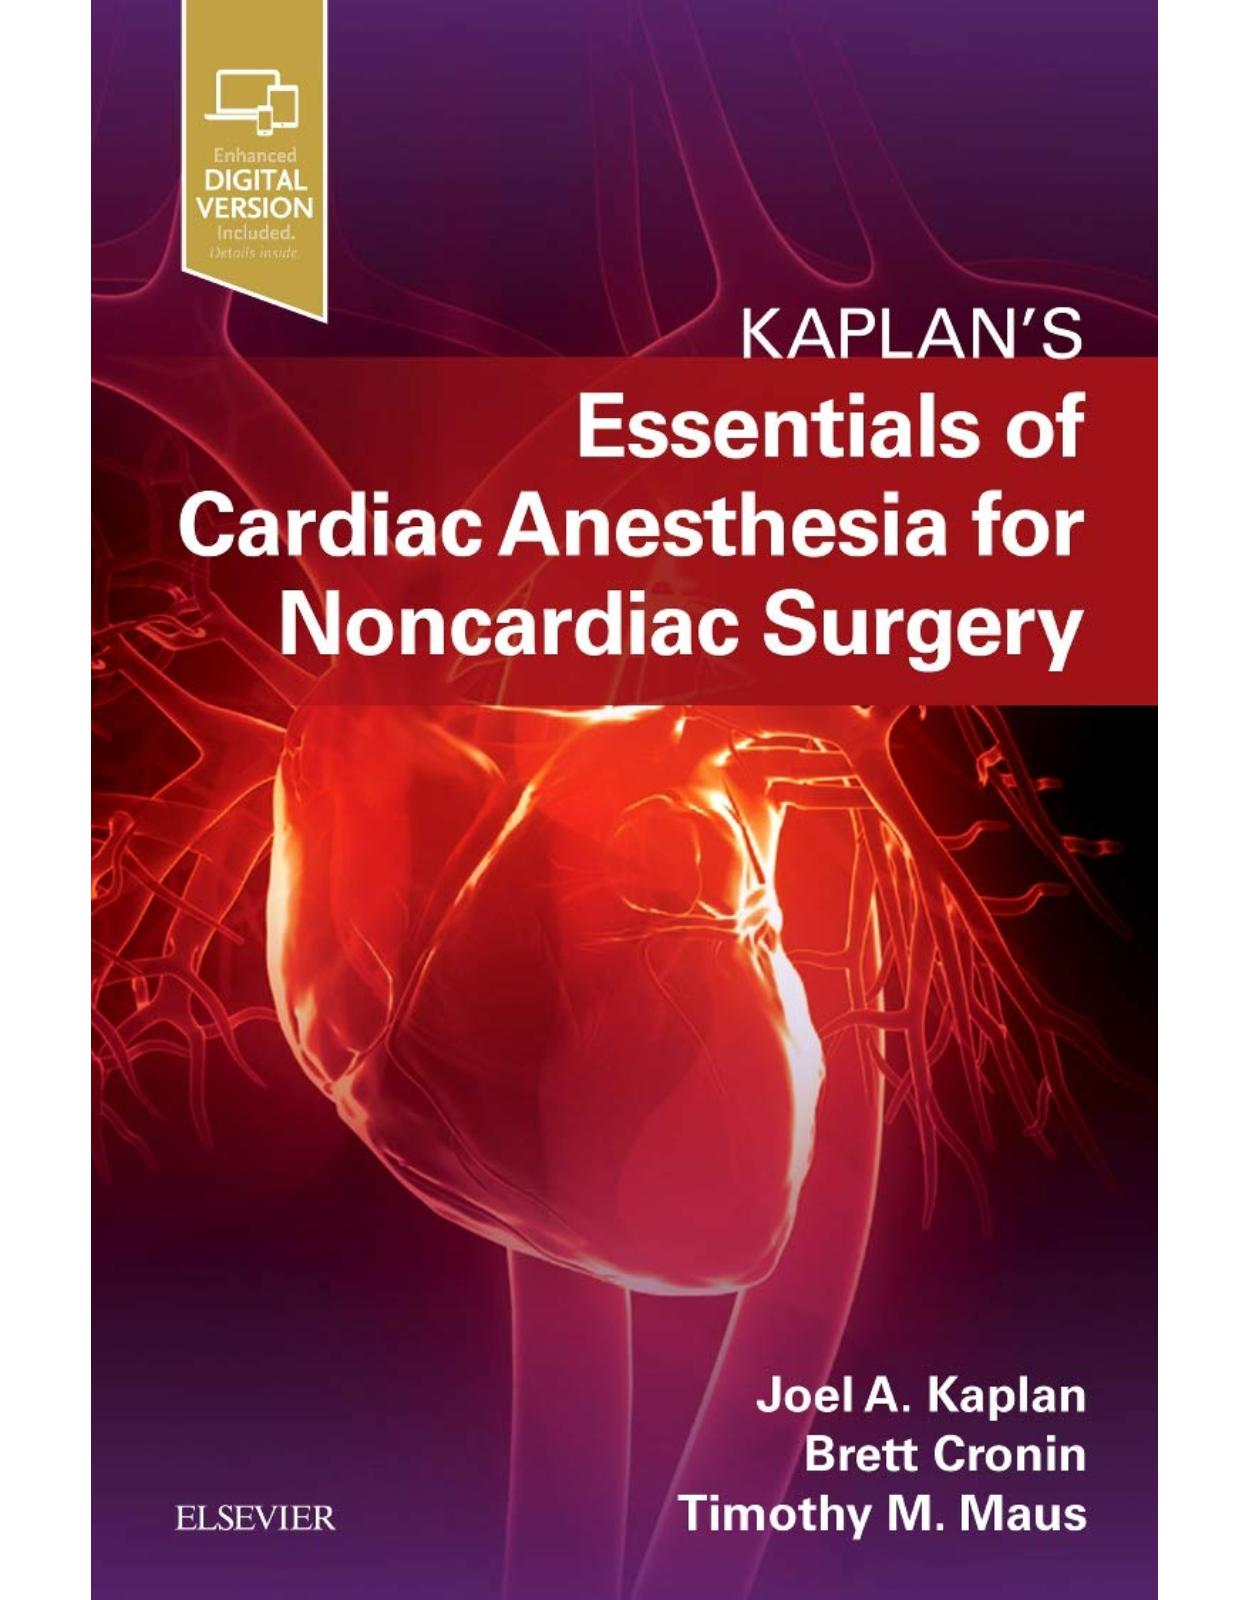 Essentials of Cardiac Anesthesia for Noncardiac Surgery: A Companion to Kaplan's Cardiac Anesthesia